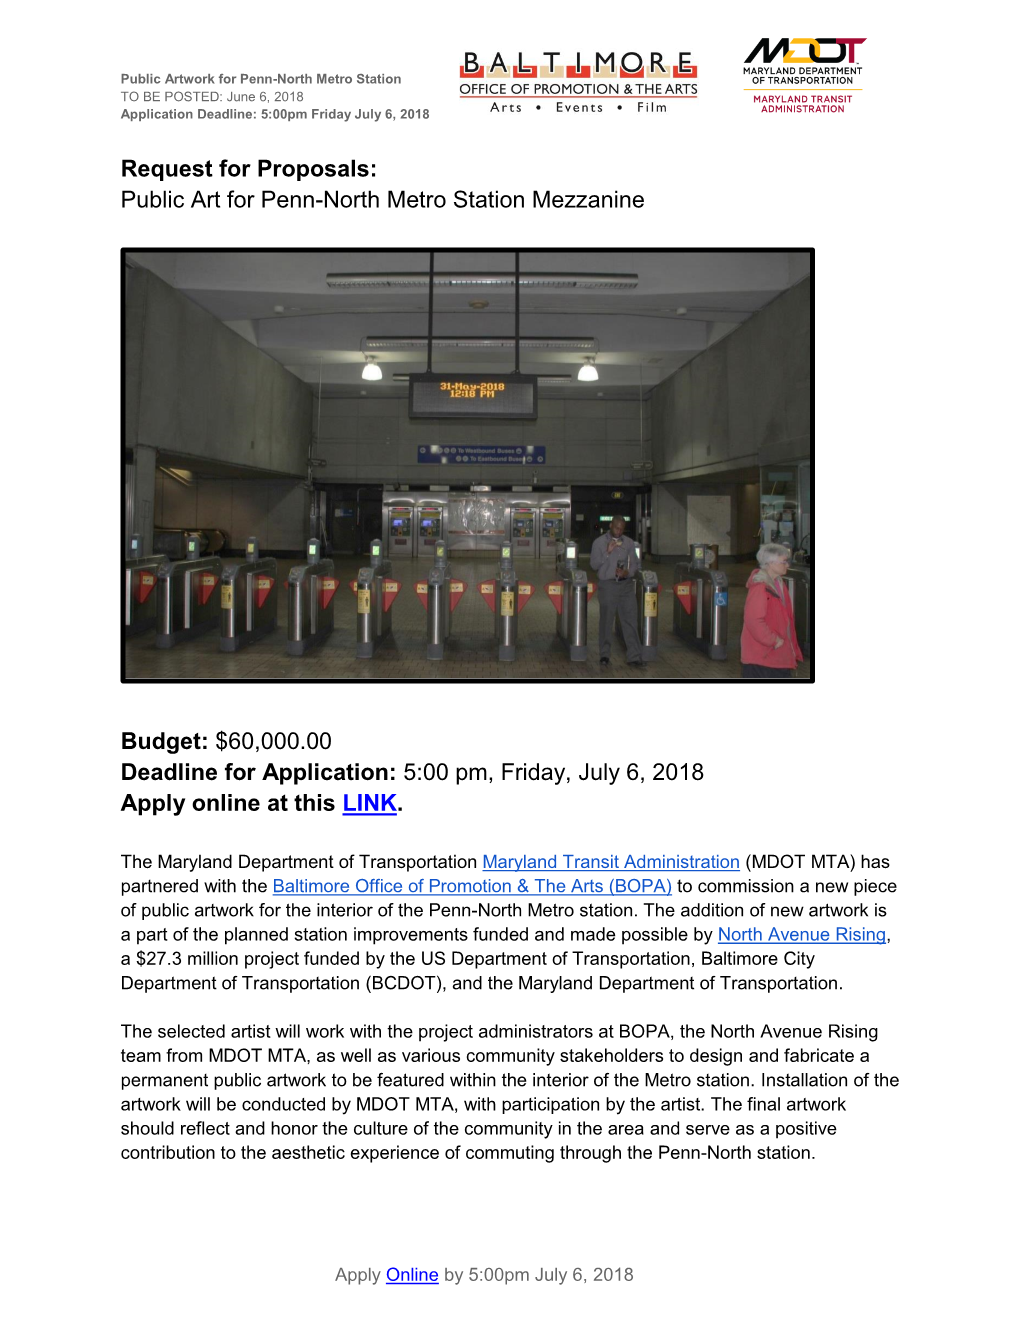 Request for Proposals: Public Art for Penn-North Metro Station Mezzanine